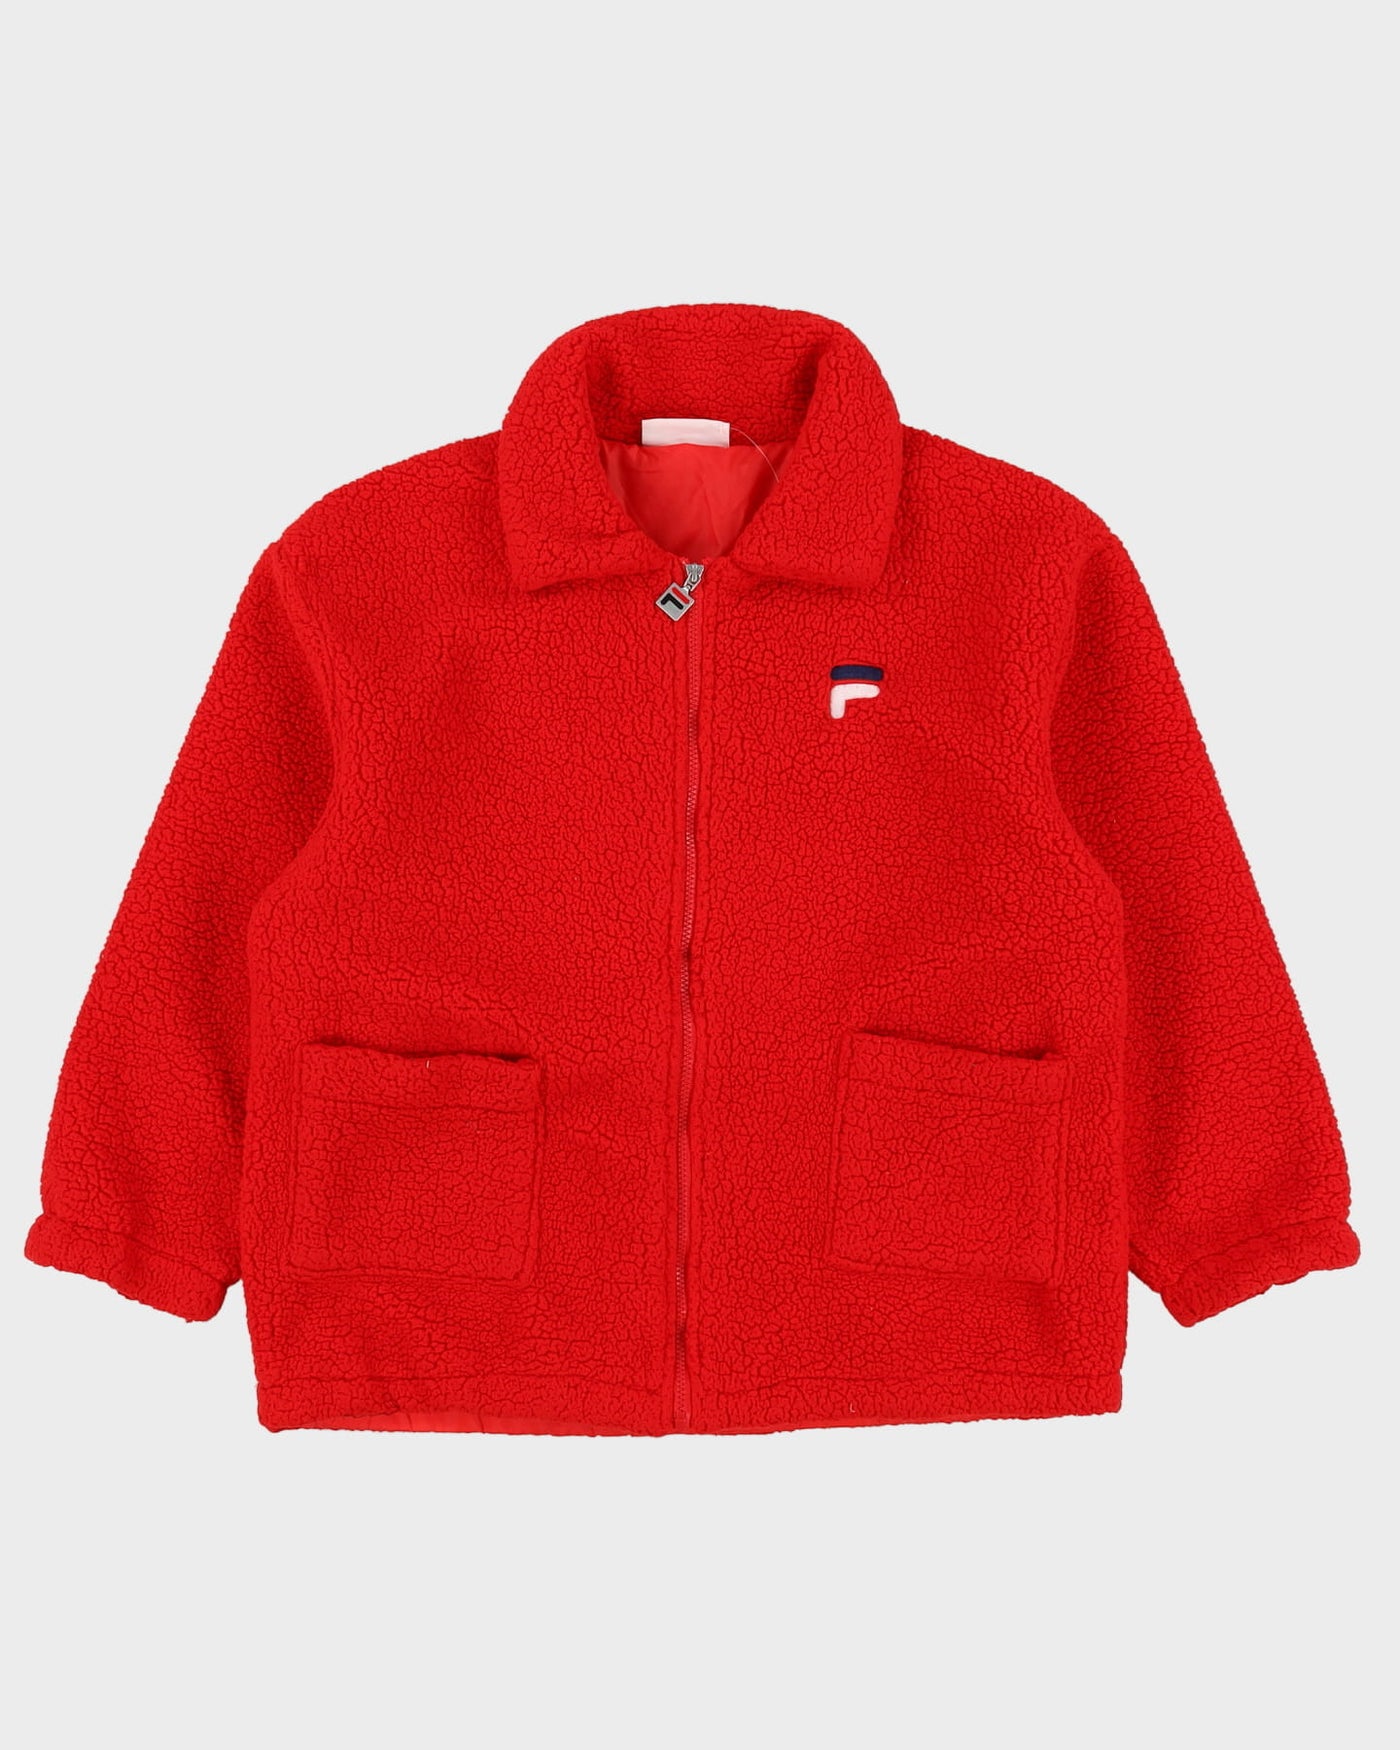 Vintage 90s FILA Red Oversized Full-Zip Fleece - M